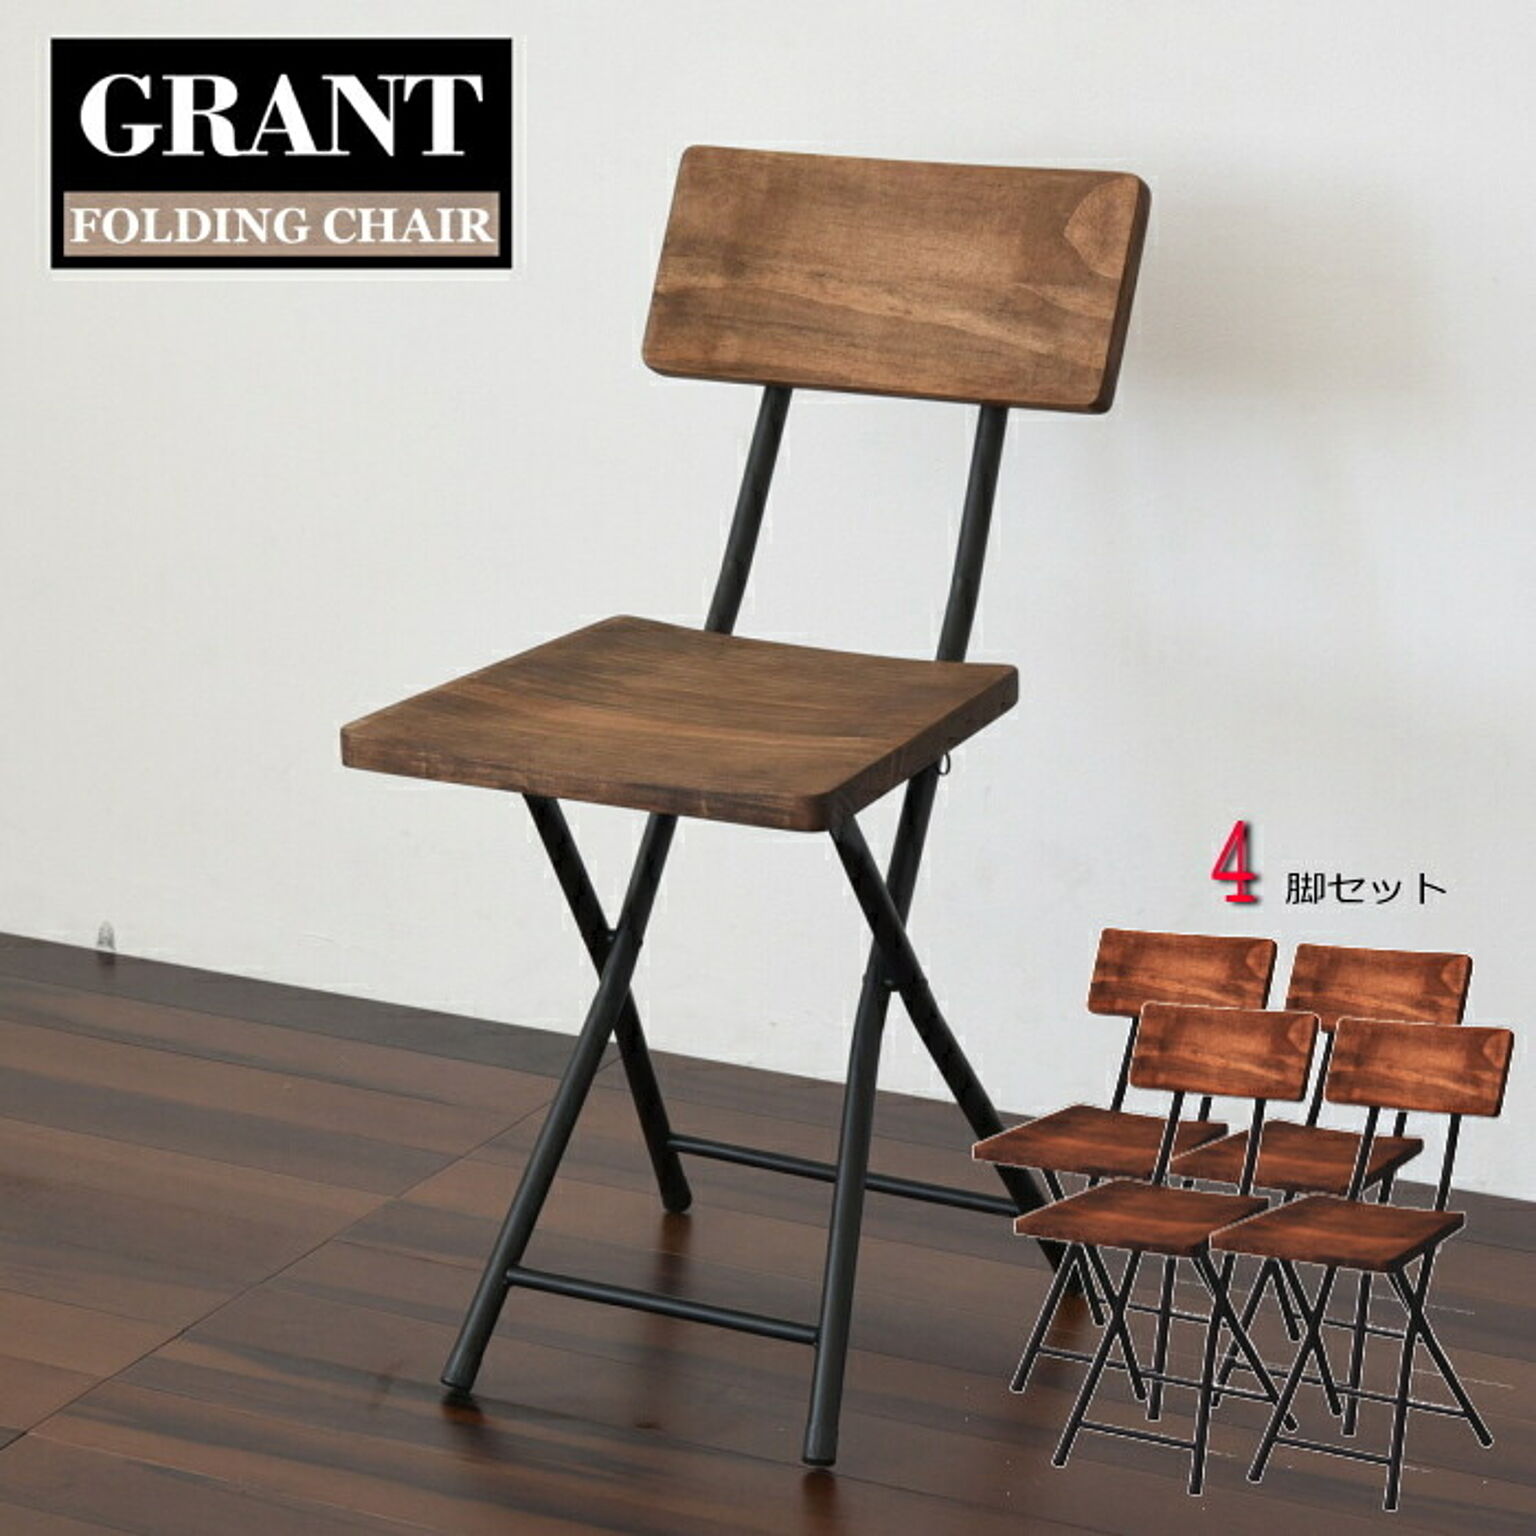 GRANT(グラント) 折りたたみチェアー 【4脚セット】折りたたみ椅子 折りたたみチェア 軽量 木製 椅子 いす イス 持ち運び アイアン アンティーク アウトドア フォールディングチェア 完成品 